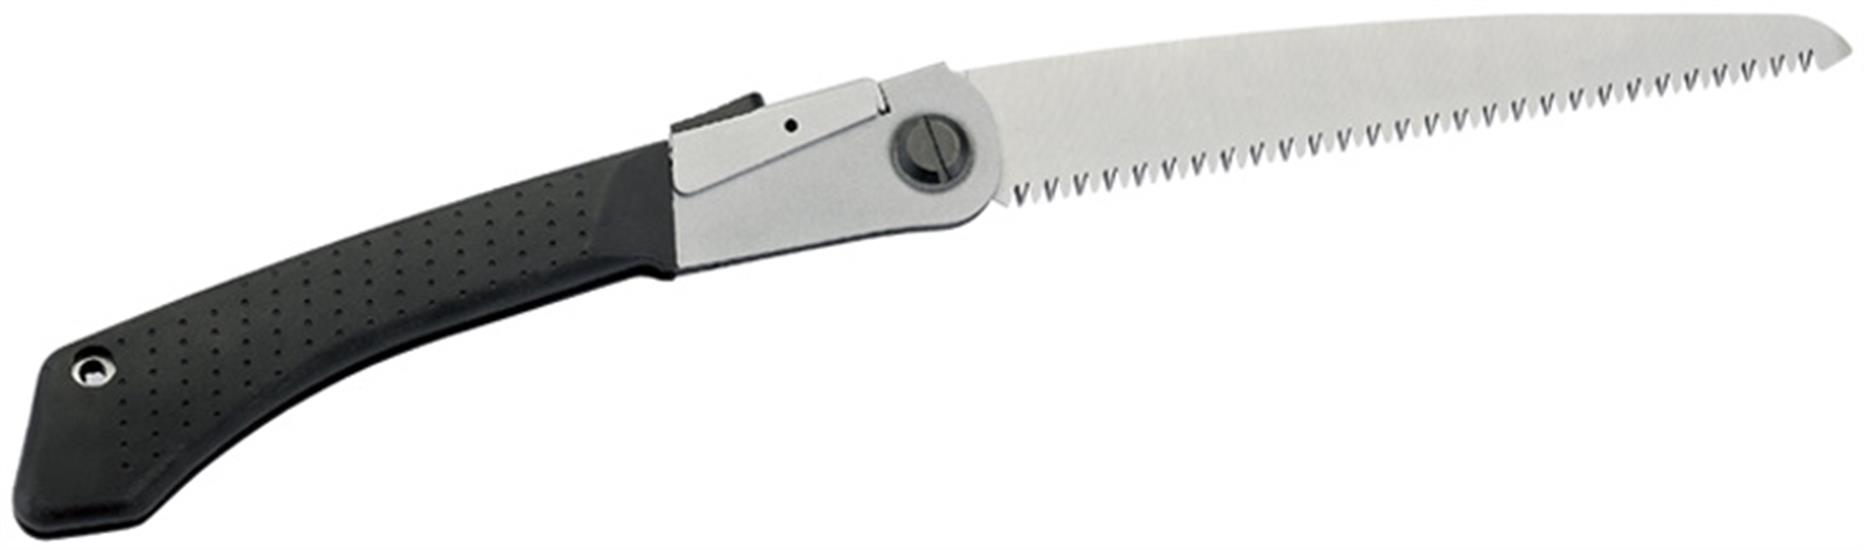 Draper 44993 �/EXP) - Folding Pruning Saw 𨈐mm)